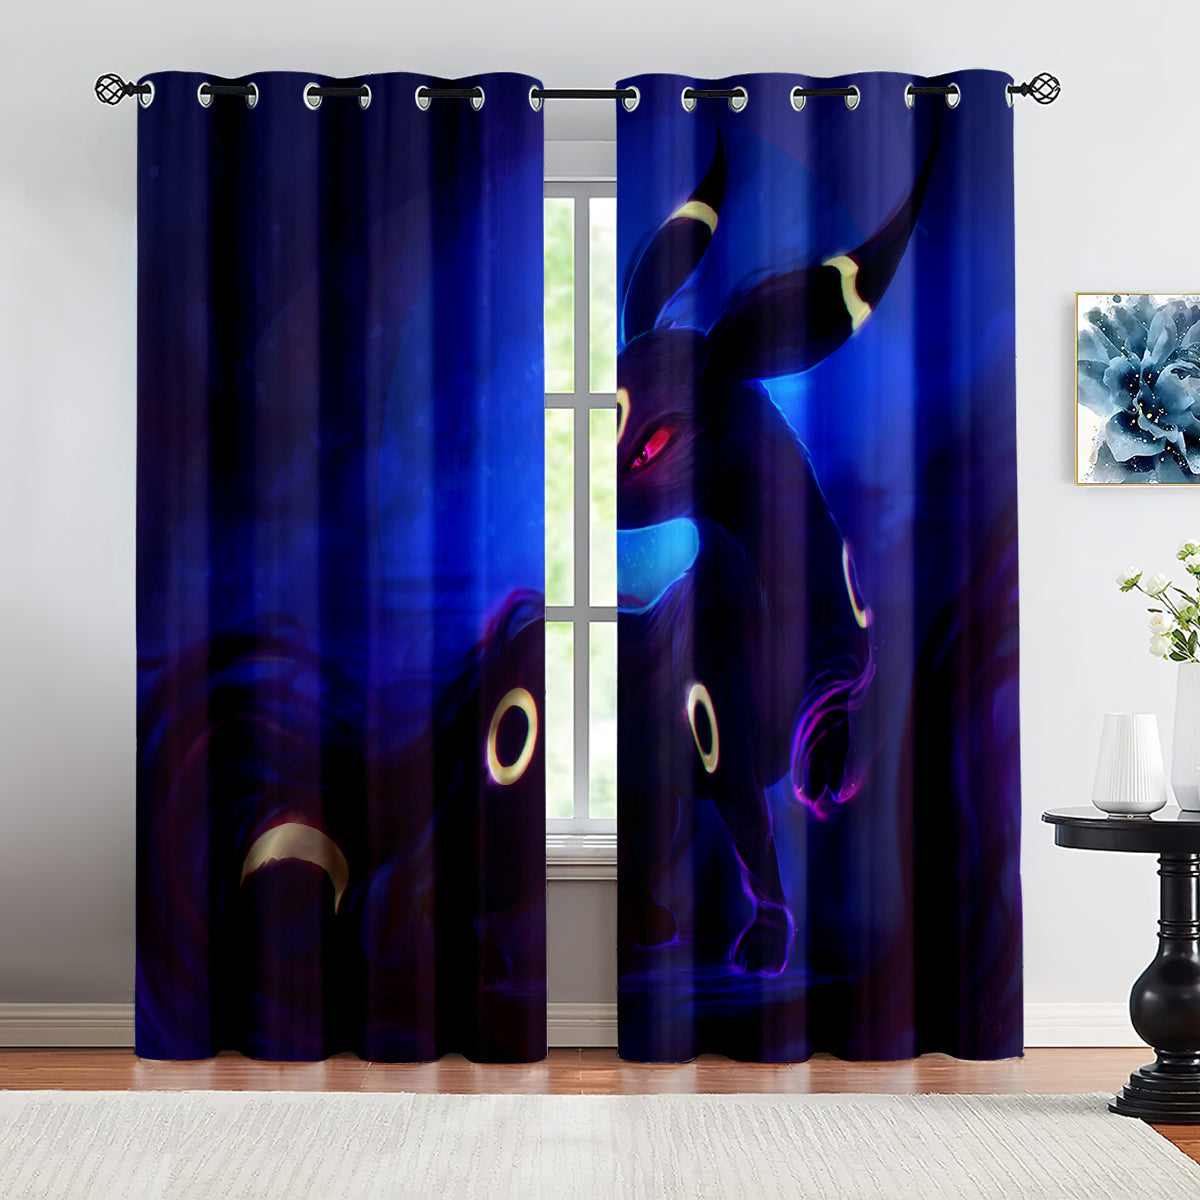 Pokemon Umbreon Blackout Curtains Drapes for Window Treatment Set